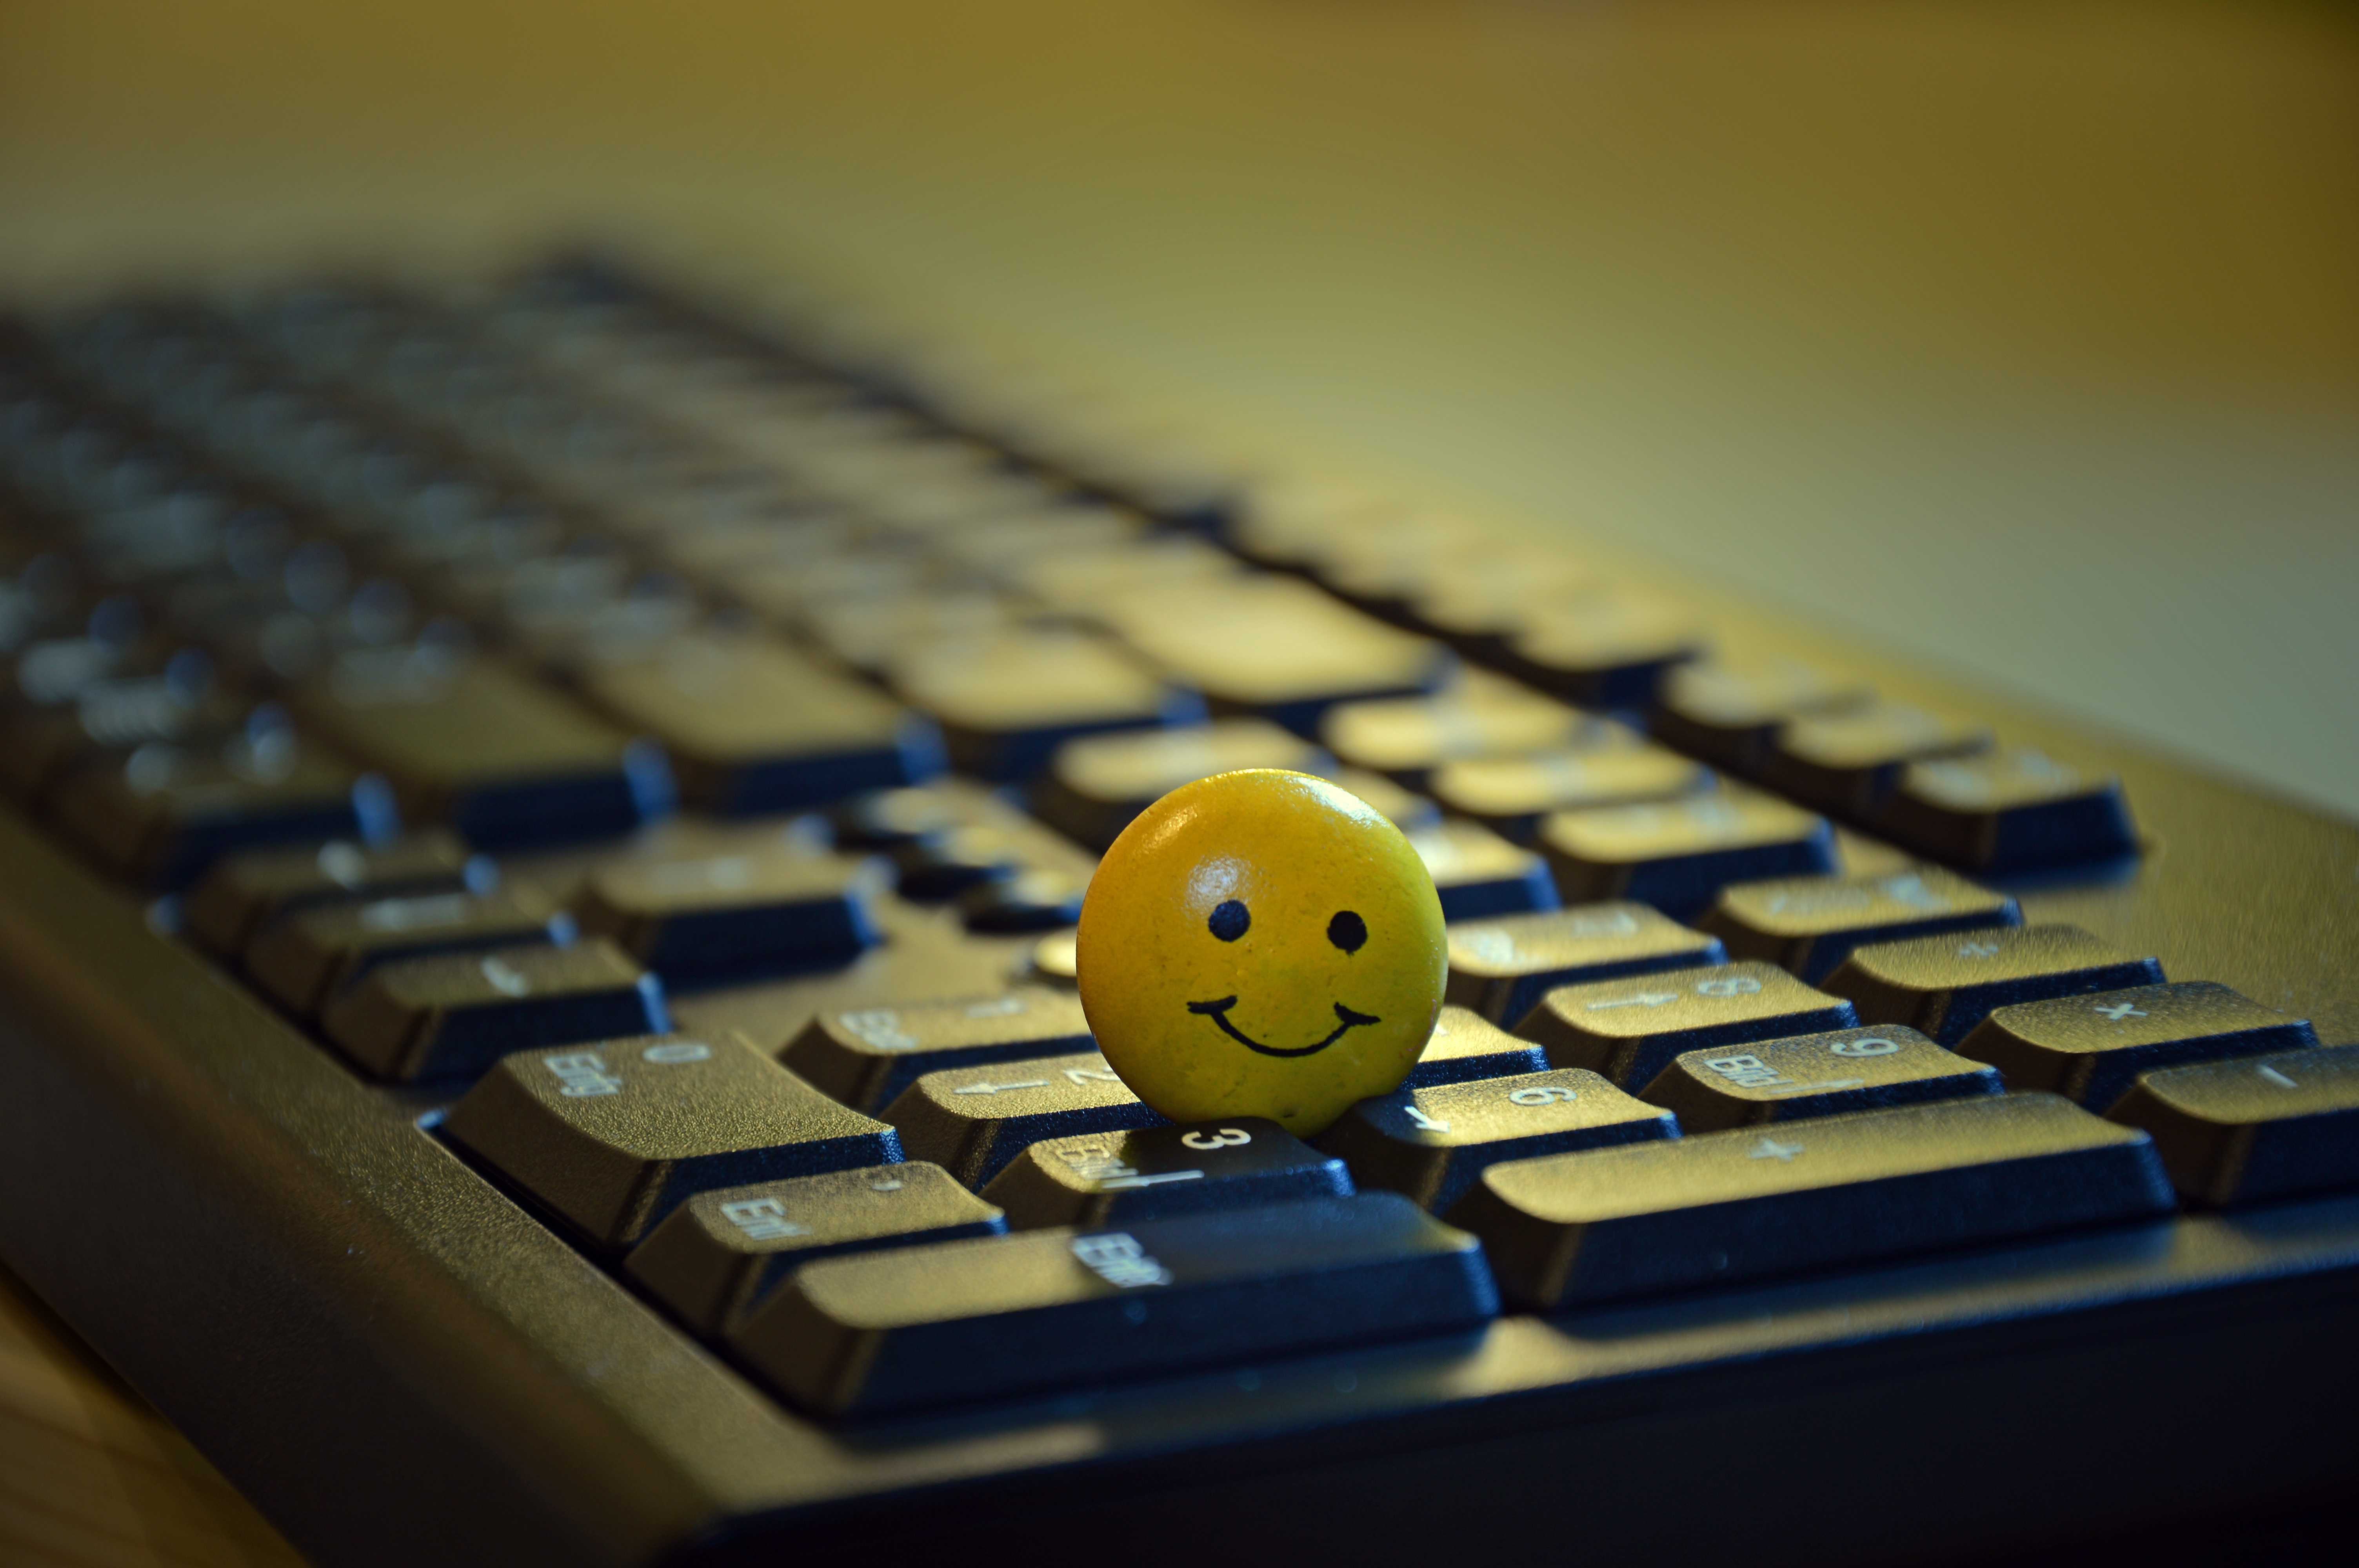 Keyboard Smiley Face Wallpaper 1